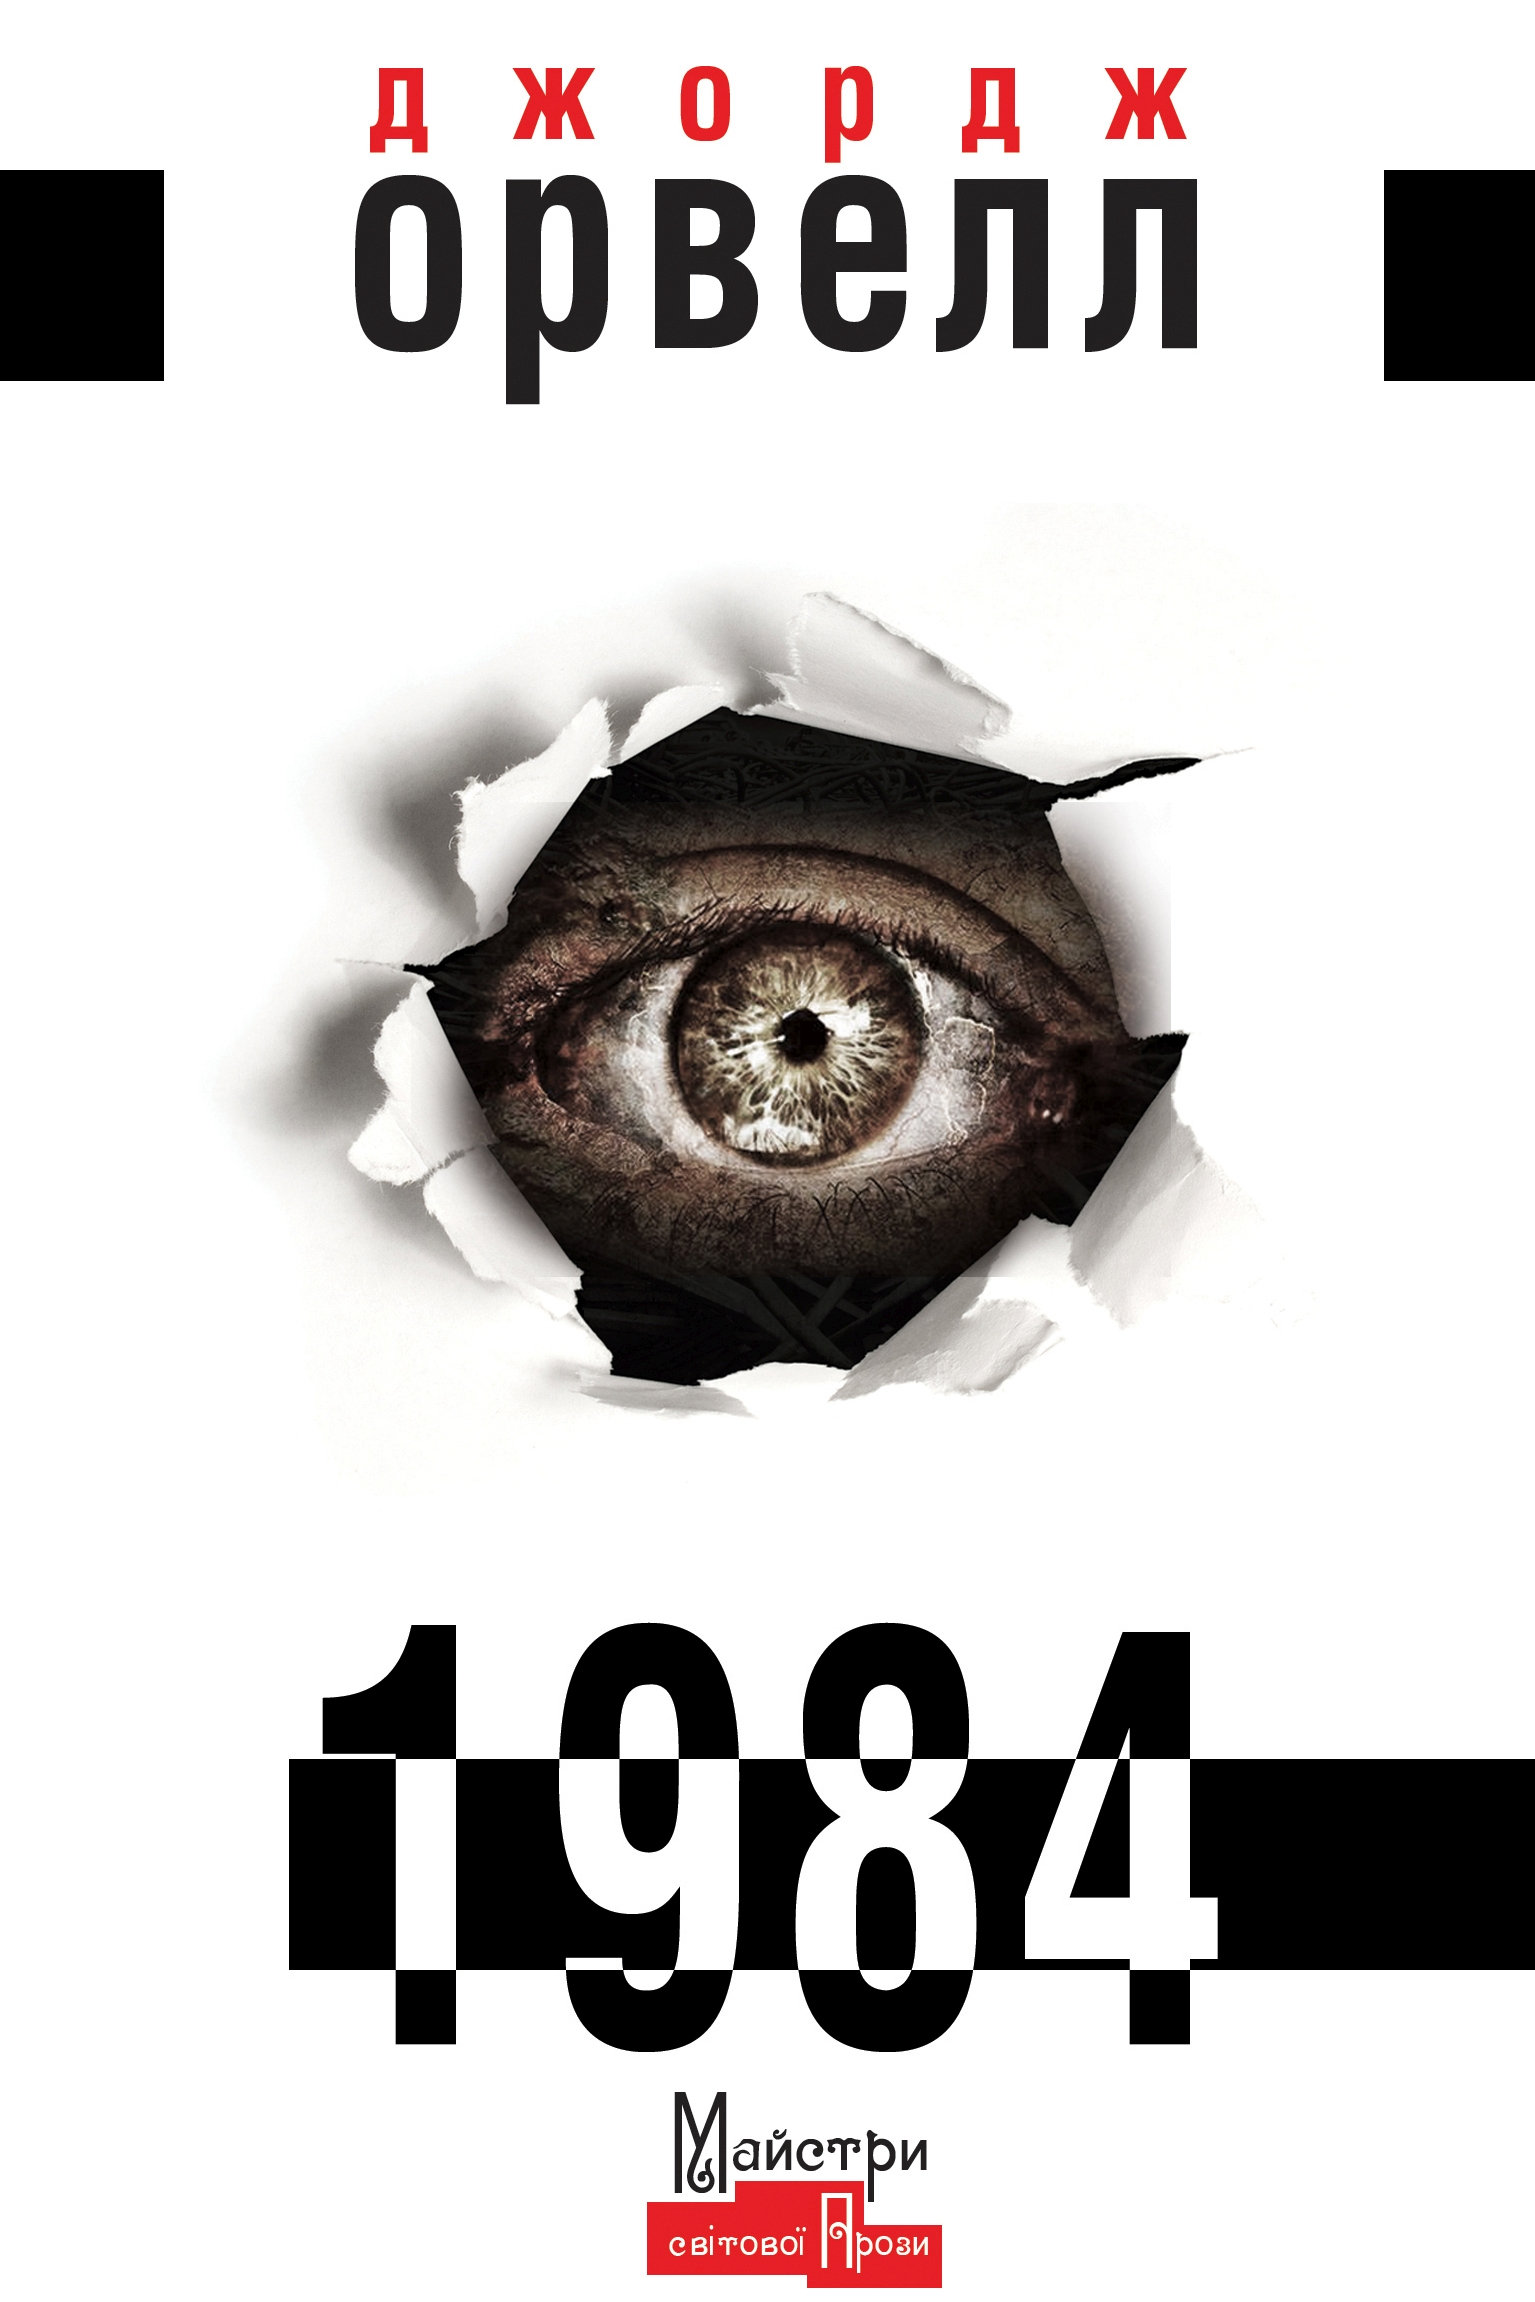 1984 - Джордж Орвелл - Слухати Книги Українською Онлайн Безкоштовно 📘 Knigi-Audio.com/uk/